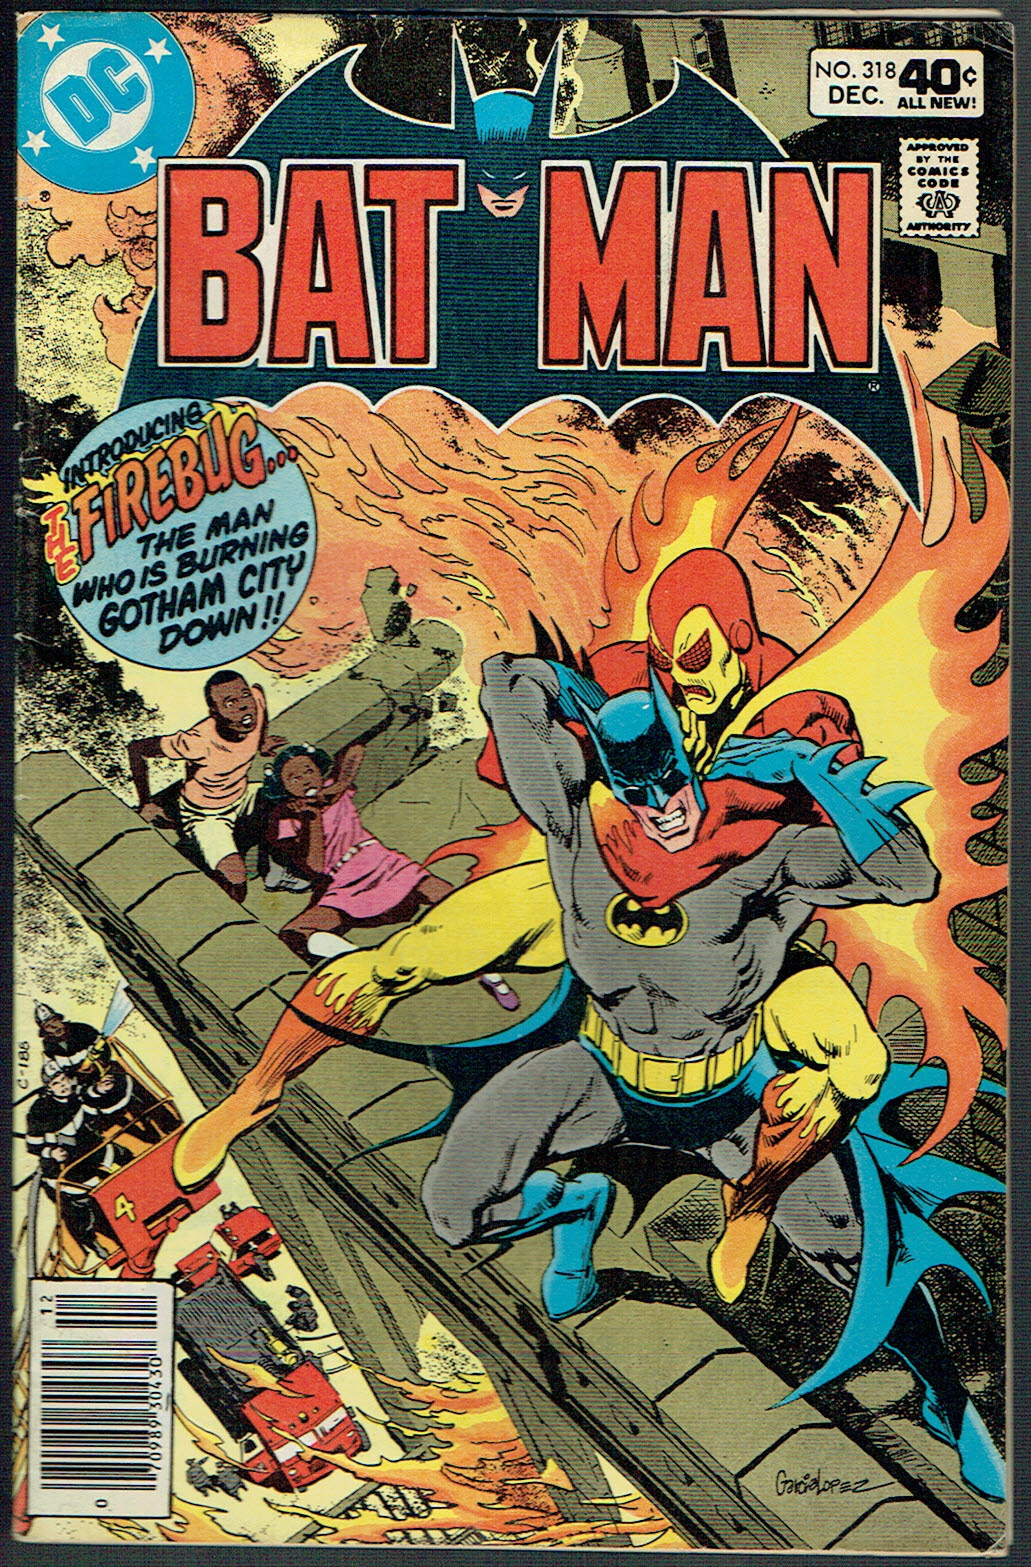 Batman #318